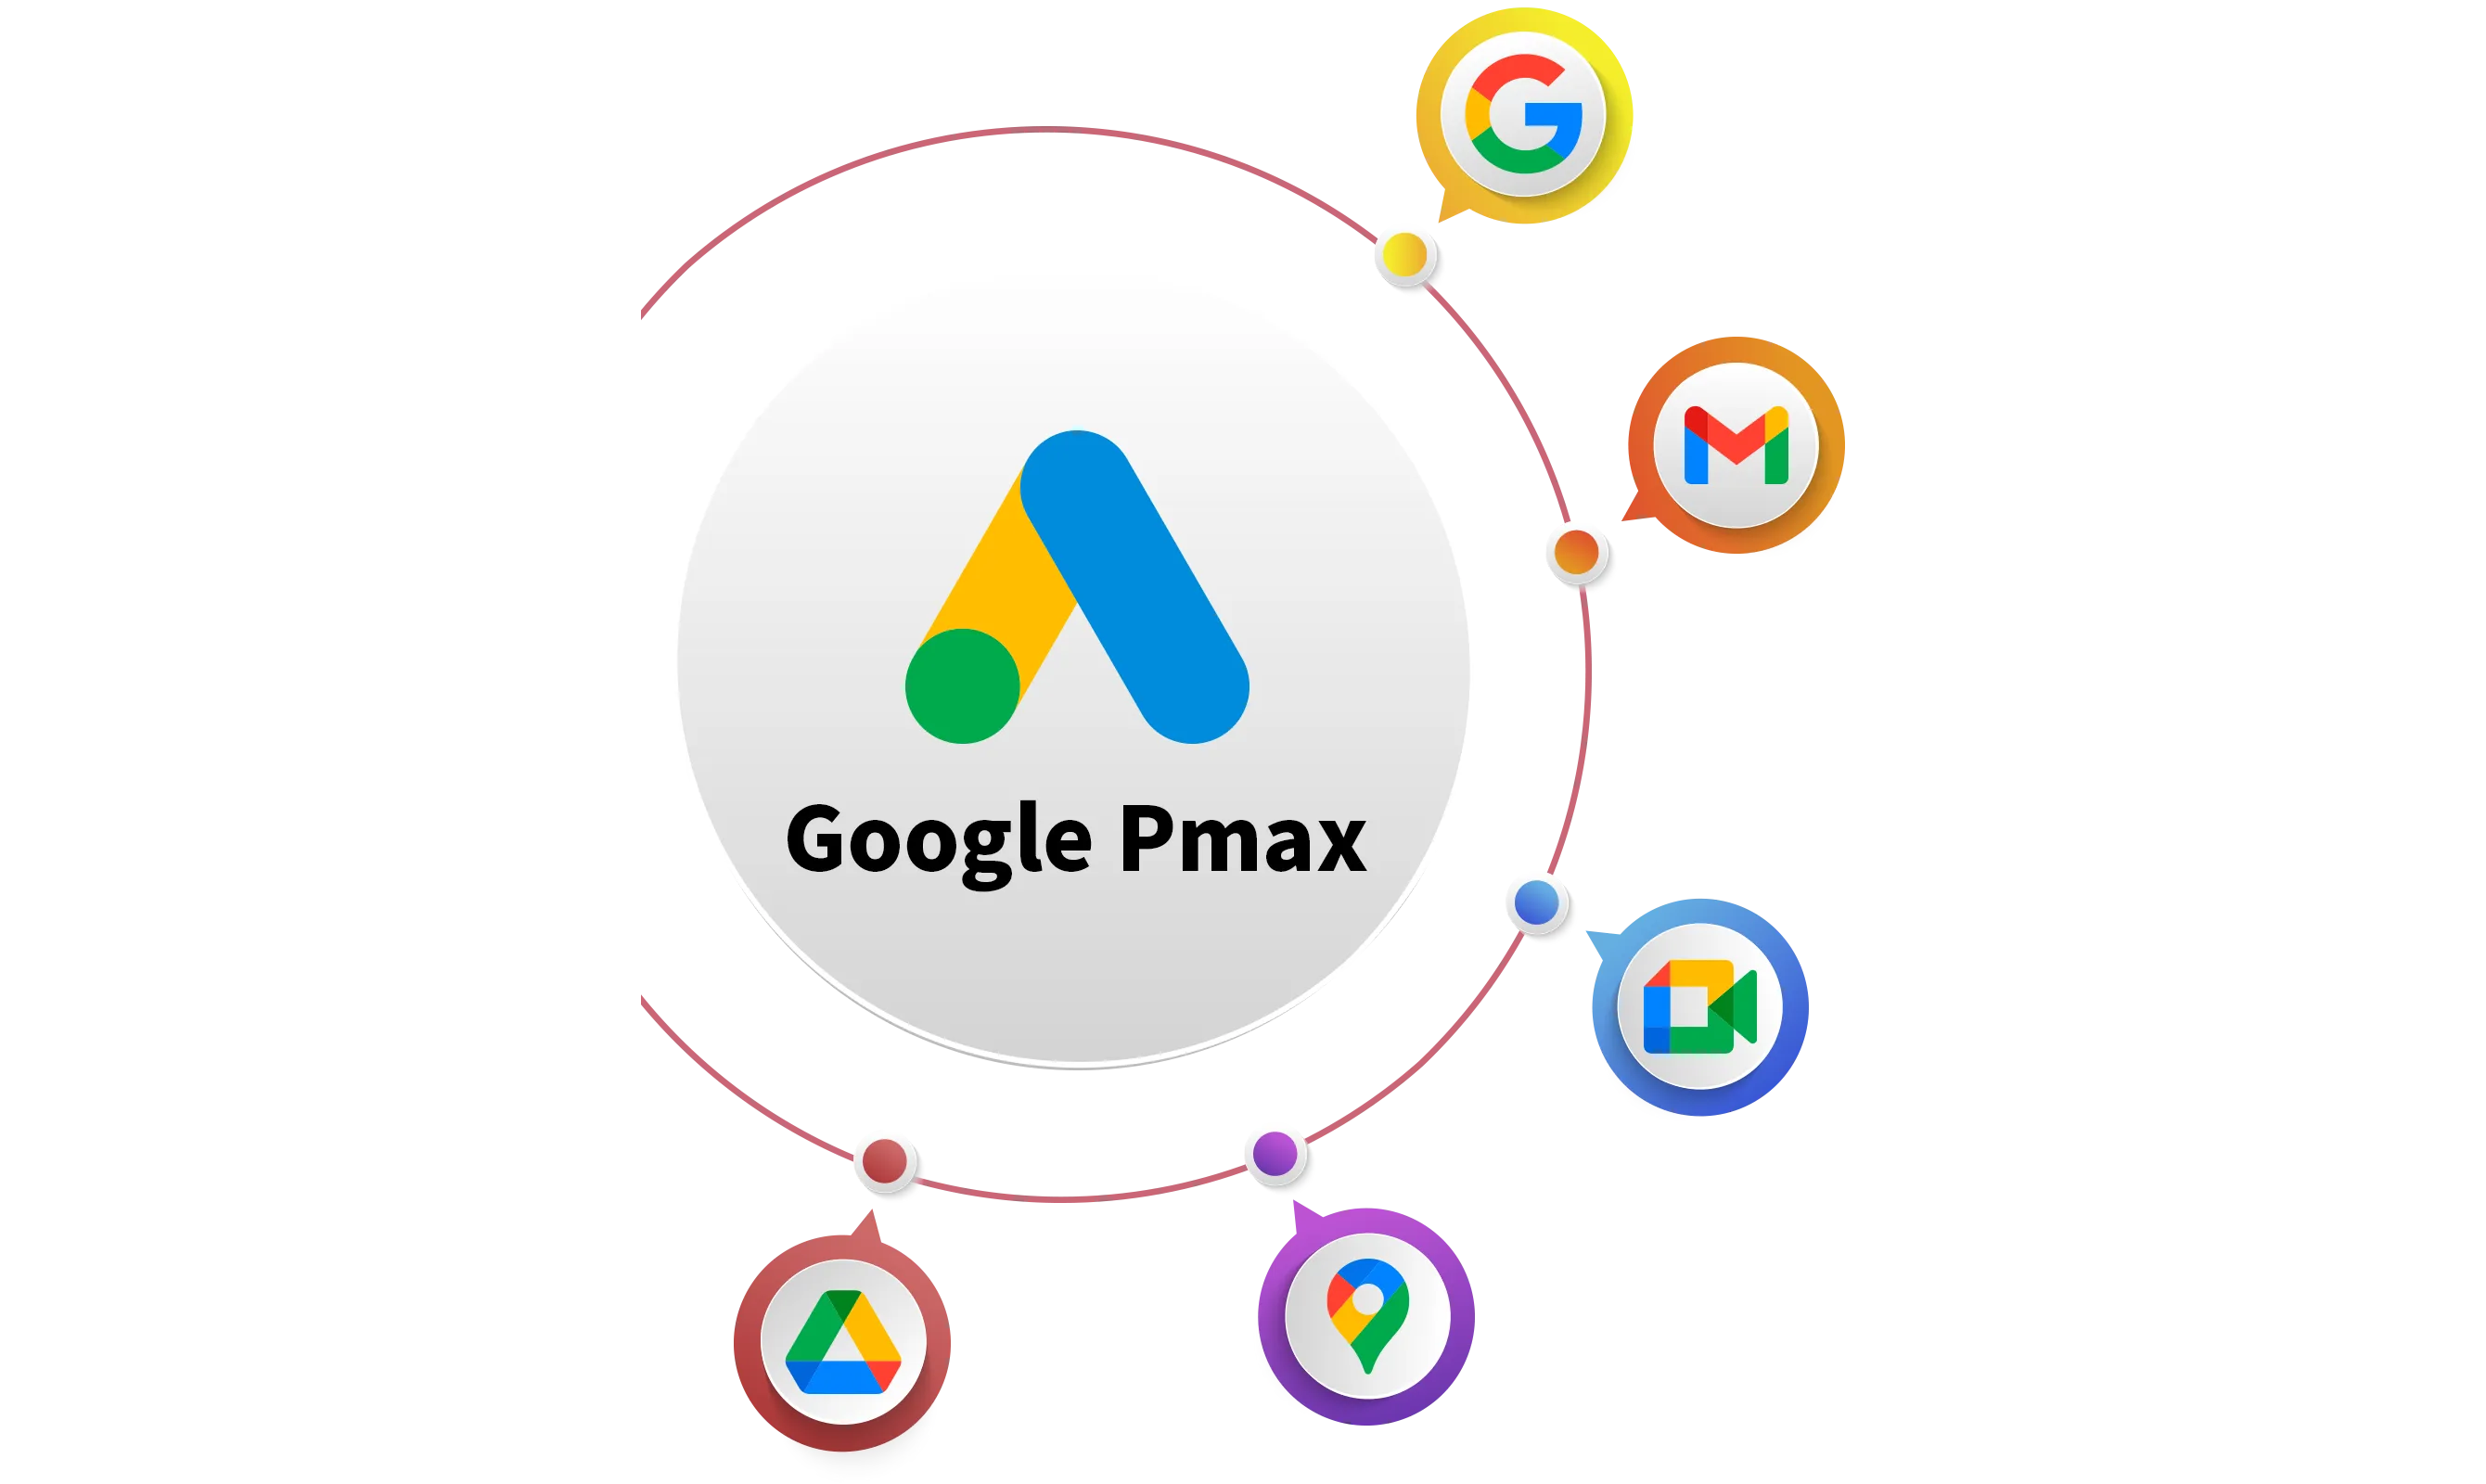 Google Pmax